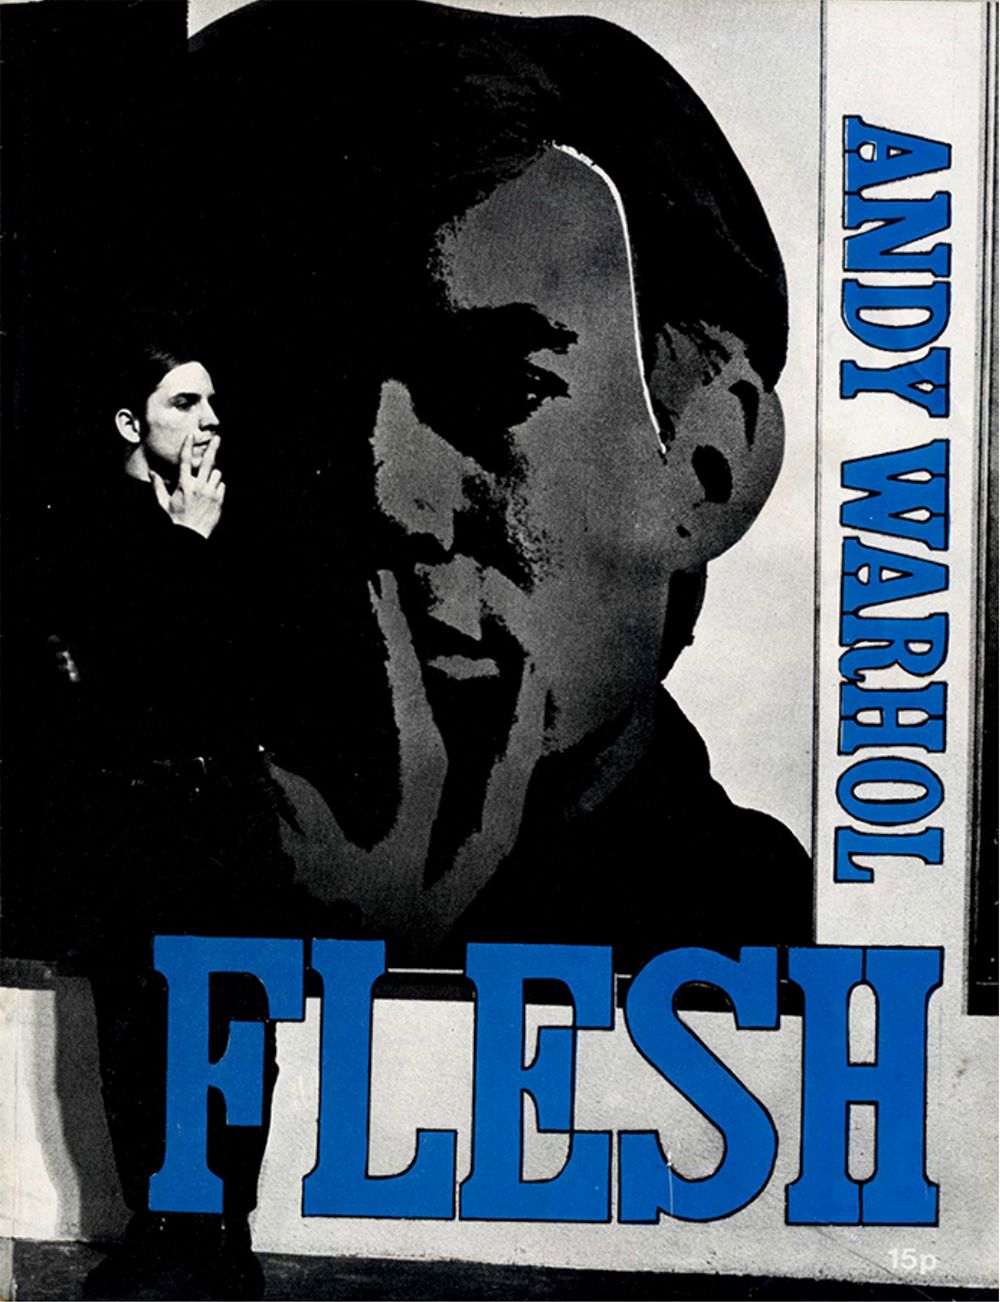 ANDY-WARHOL’S-FLESH-(1968;-1971-FIRST-UK-RELEASE)-PROGRAM